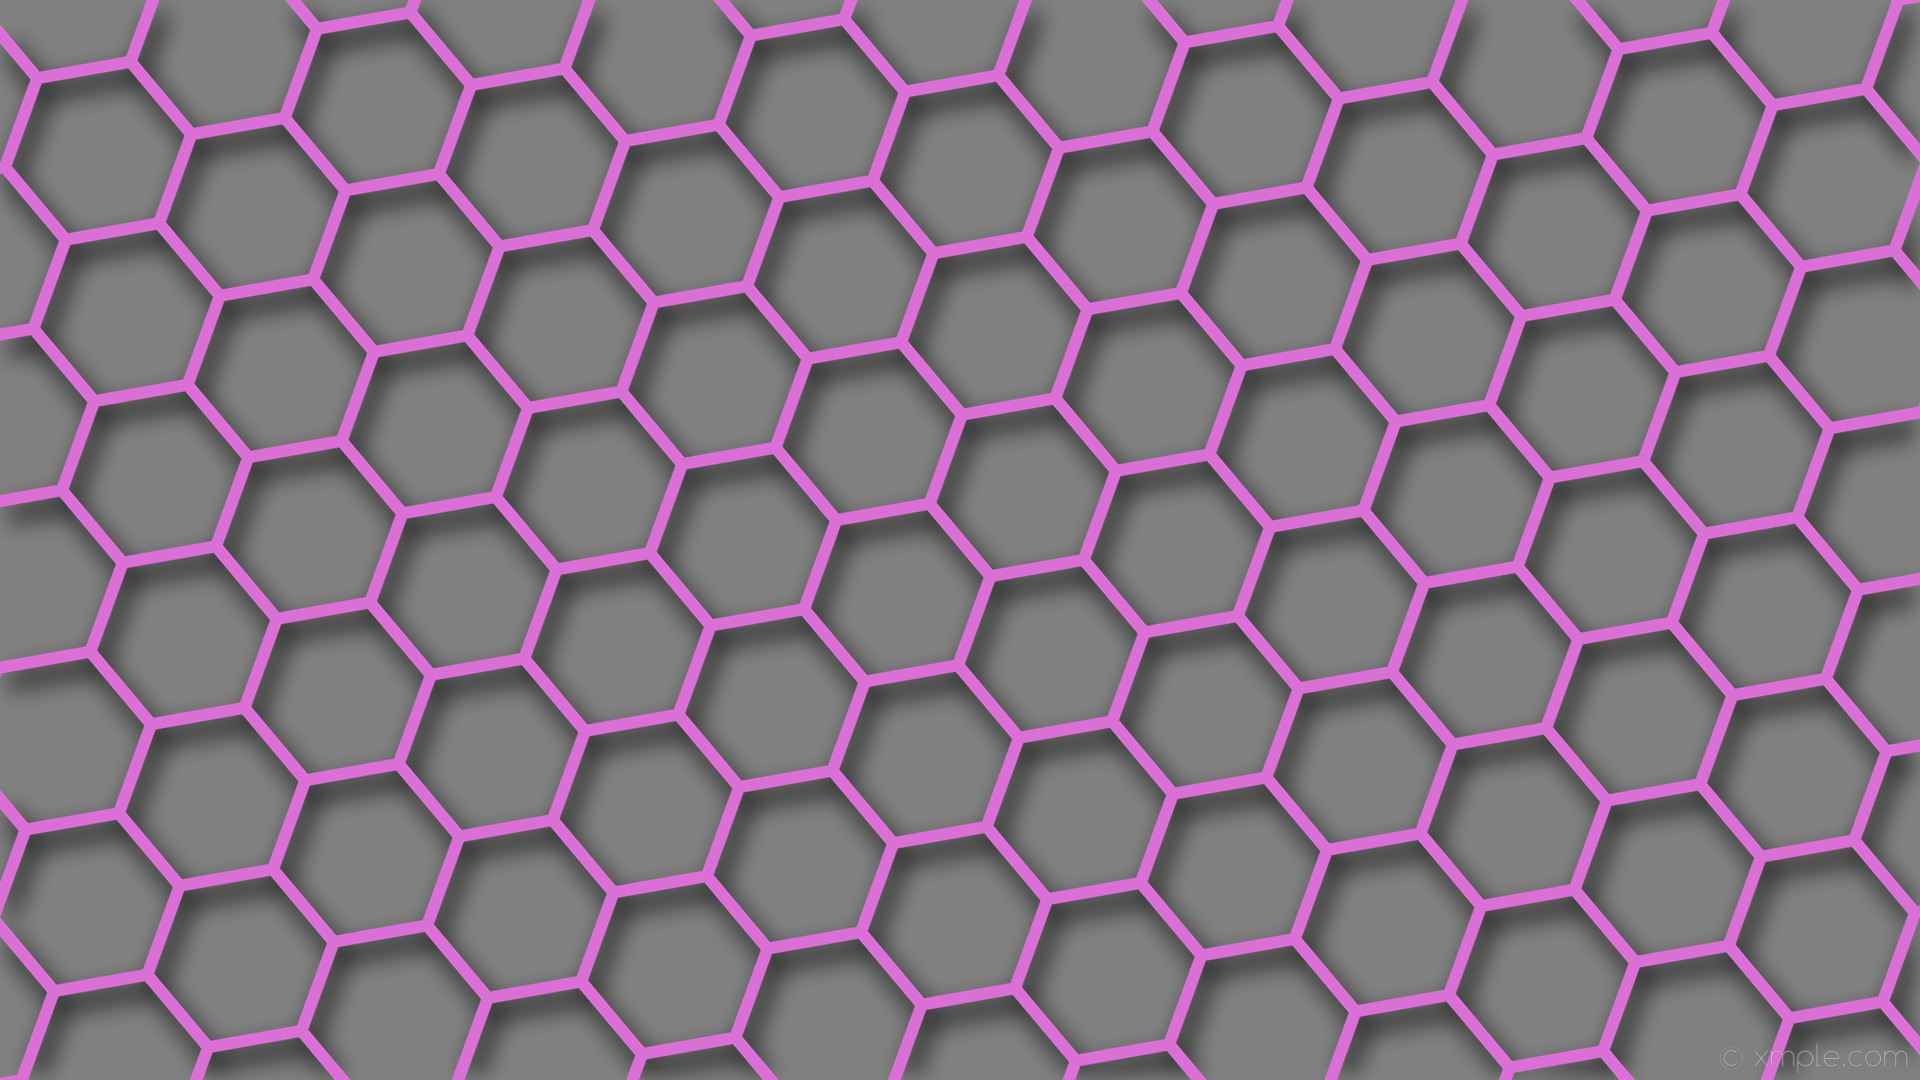 1920x1080 wallpaper beehive grey purple drop shadow hexagon orchid gray #da70d6  #808080 45Â° 12px